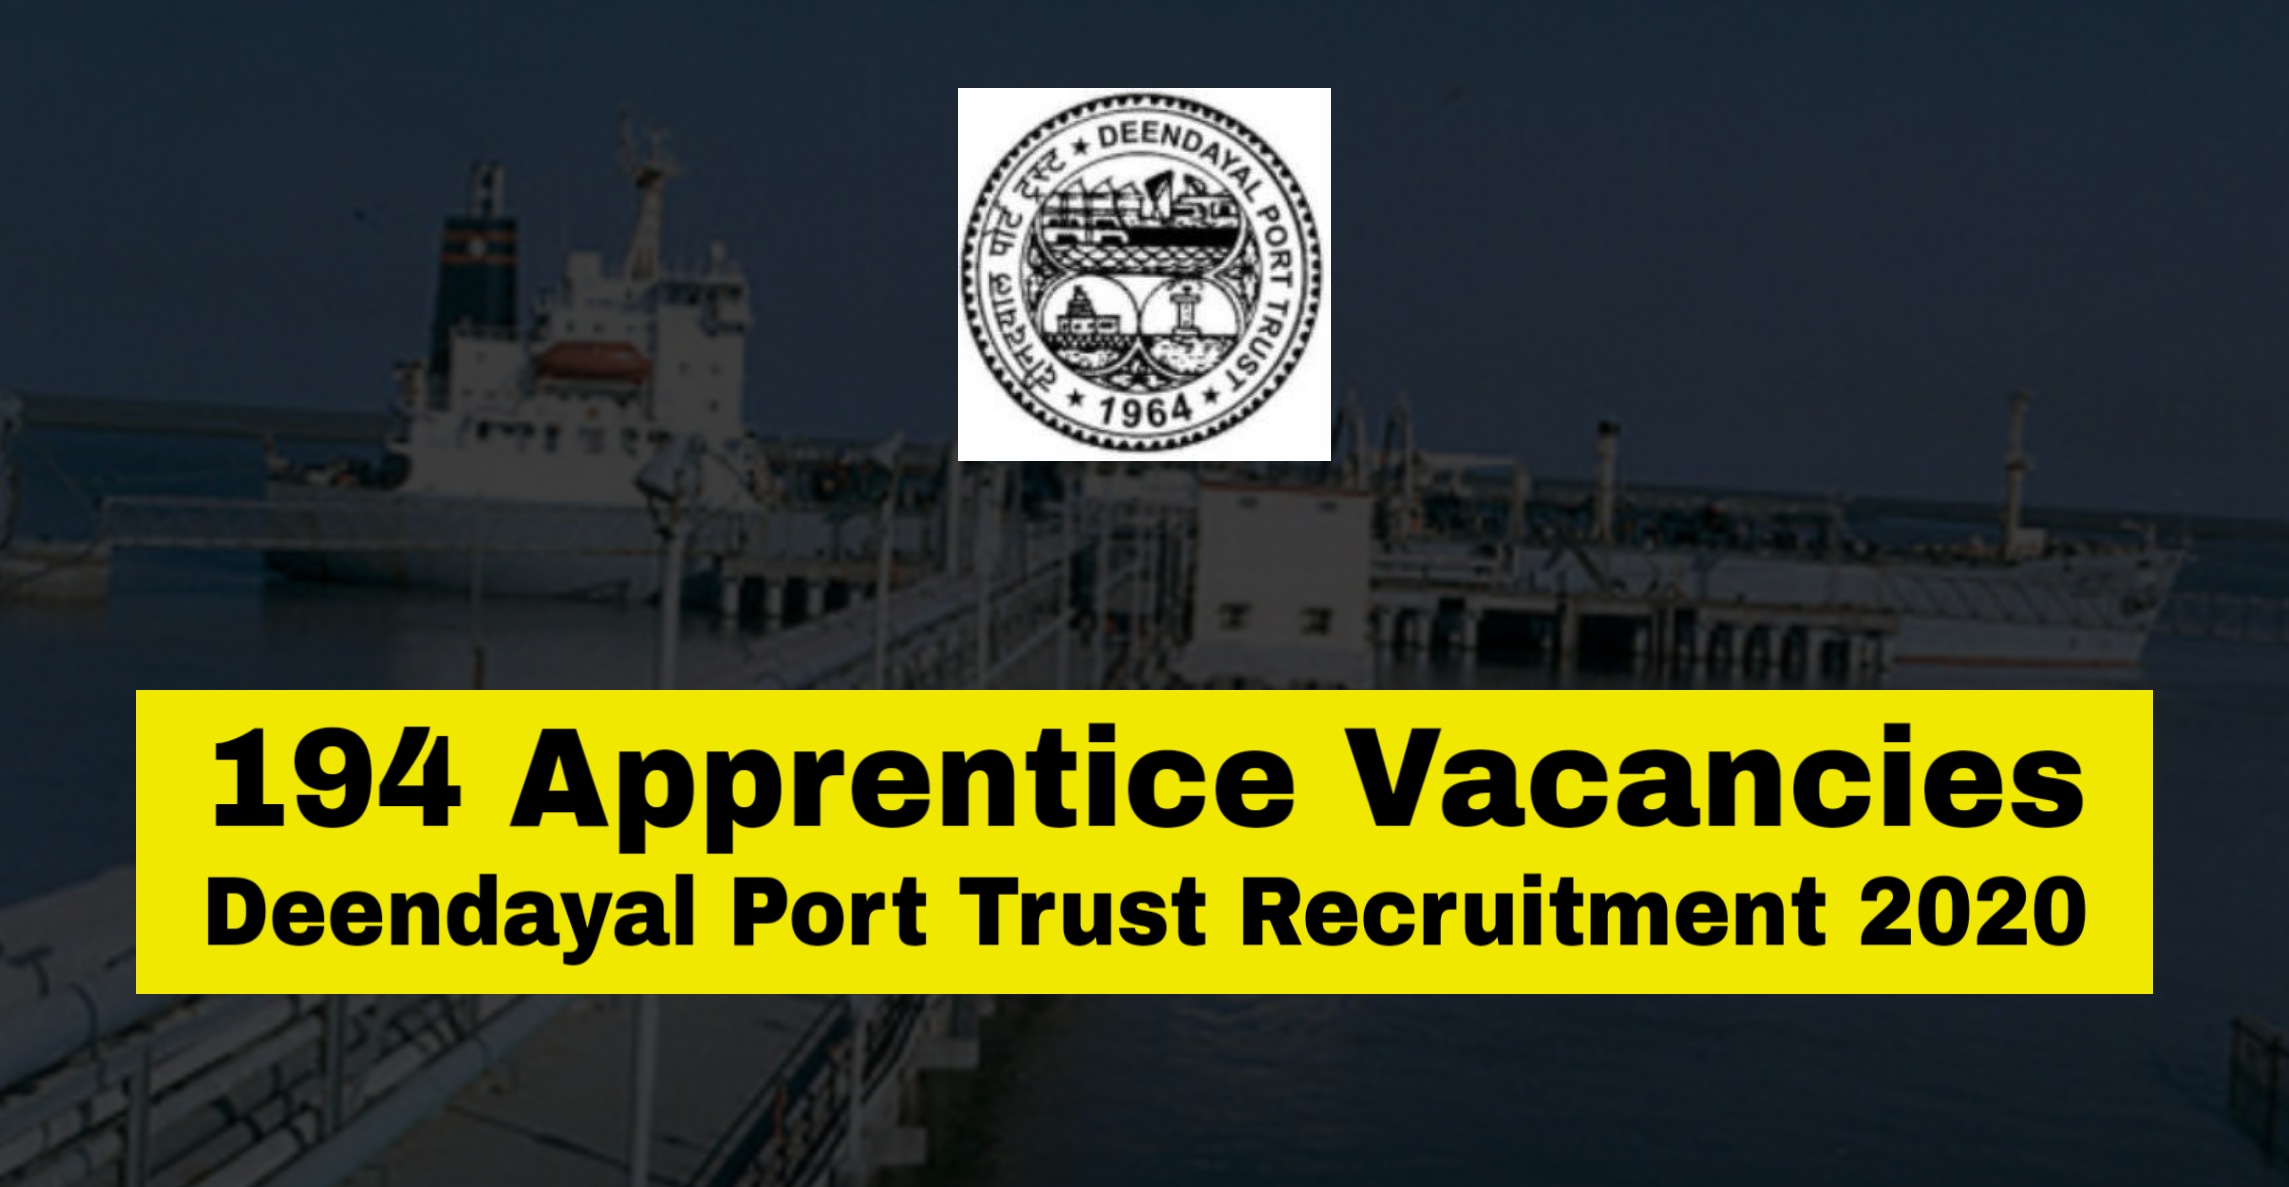 Deendayal Port Trust Recruitment 2020- 194 Apprentice Training Vacancies